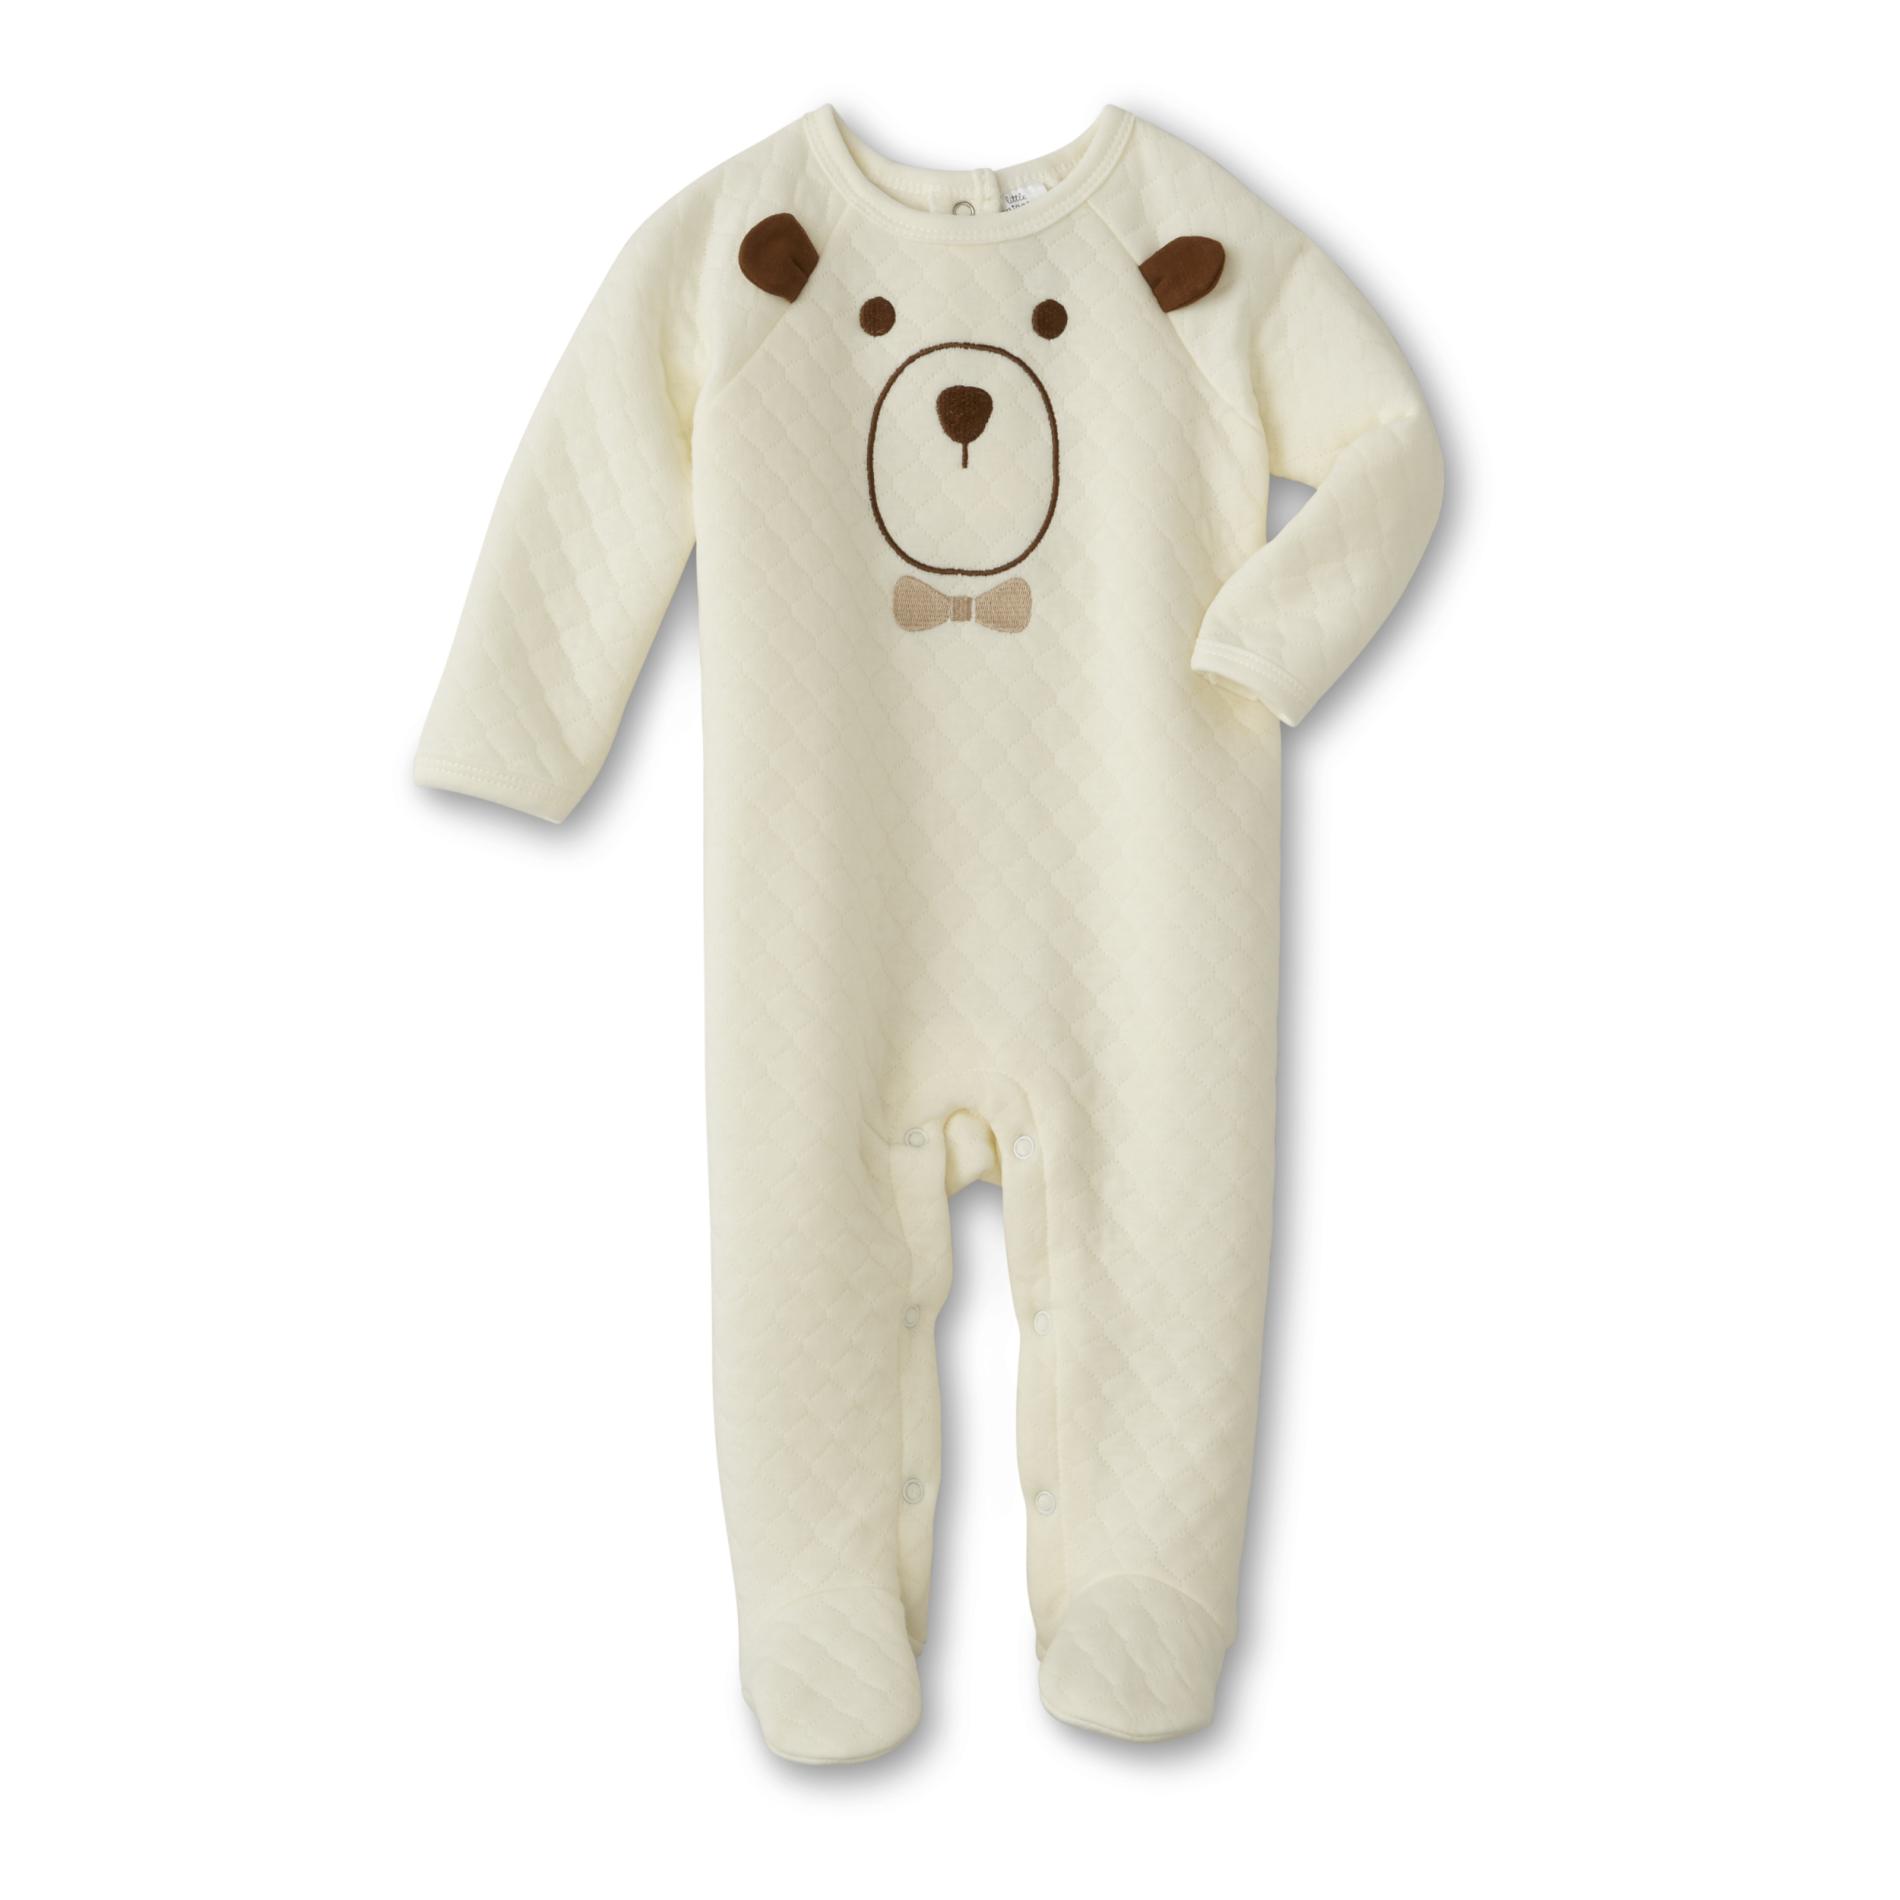 Cudlie Infant Boys' Quilted Sleeper Pajamas - Bear